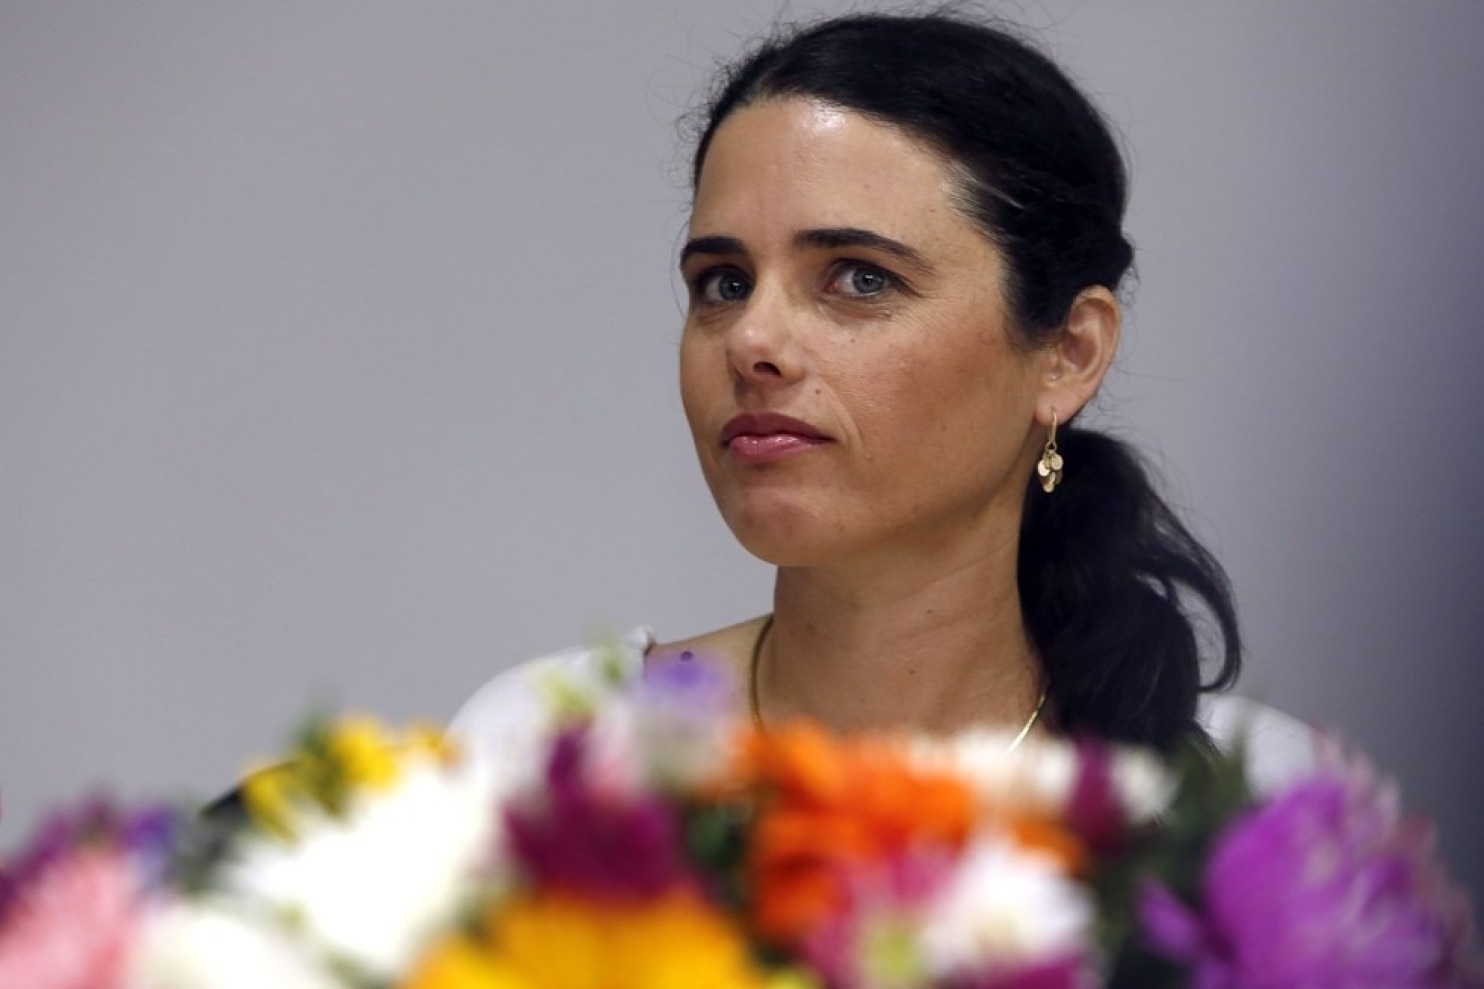 Israeli minister: Criticizing Israel is the new anti-Semitism